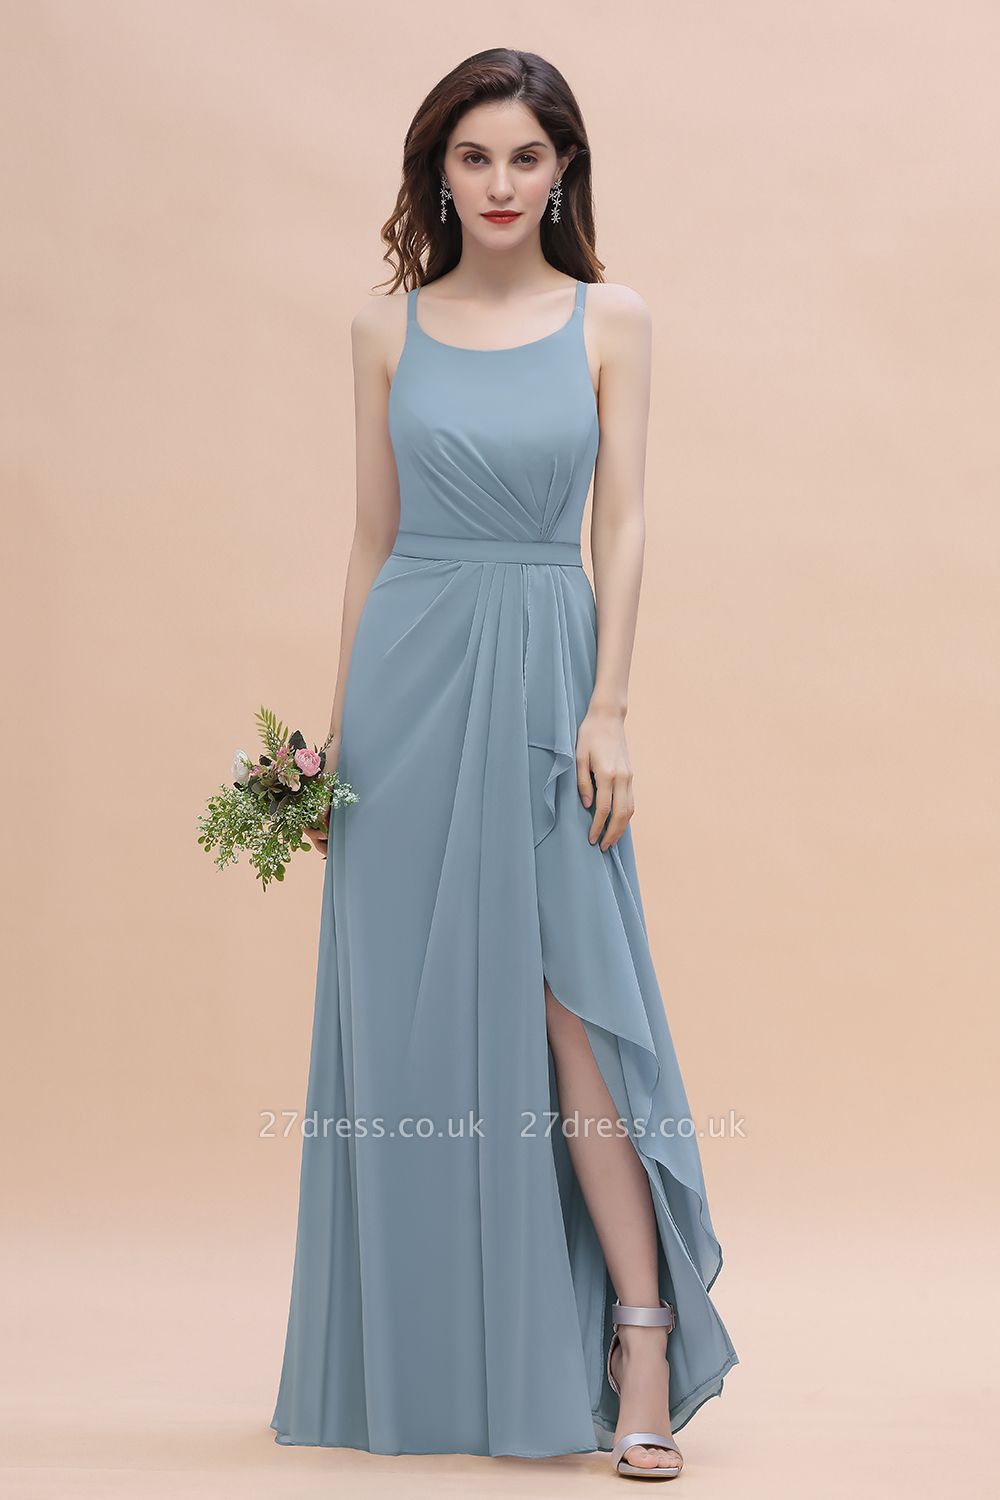 Gorgeous Dusty Blue Chiffon Bridesmaid Dress with Side Slit